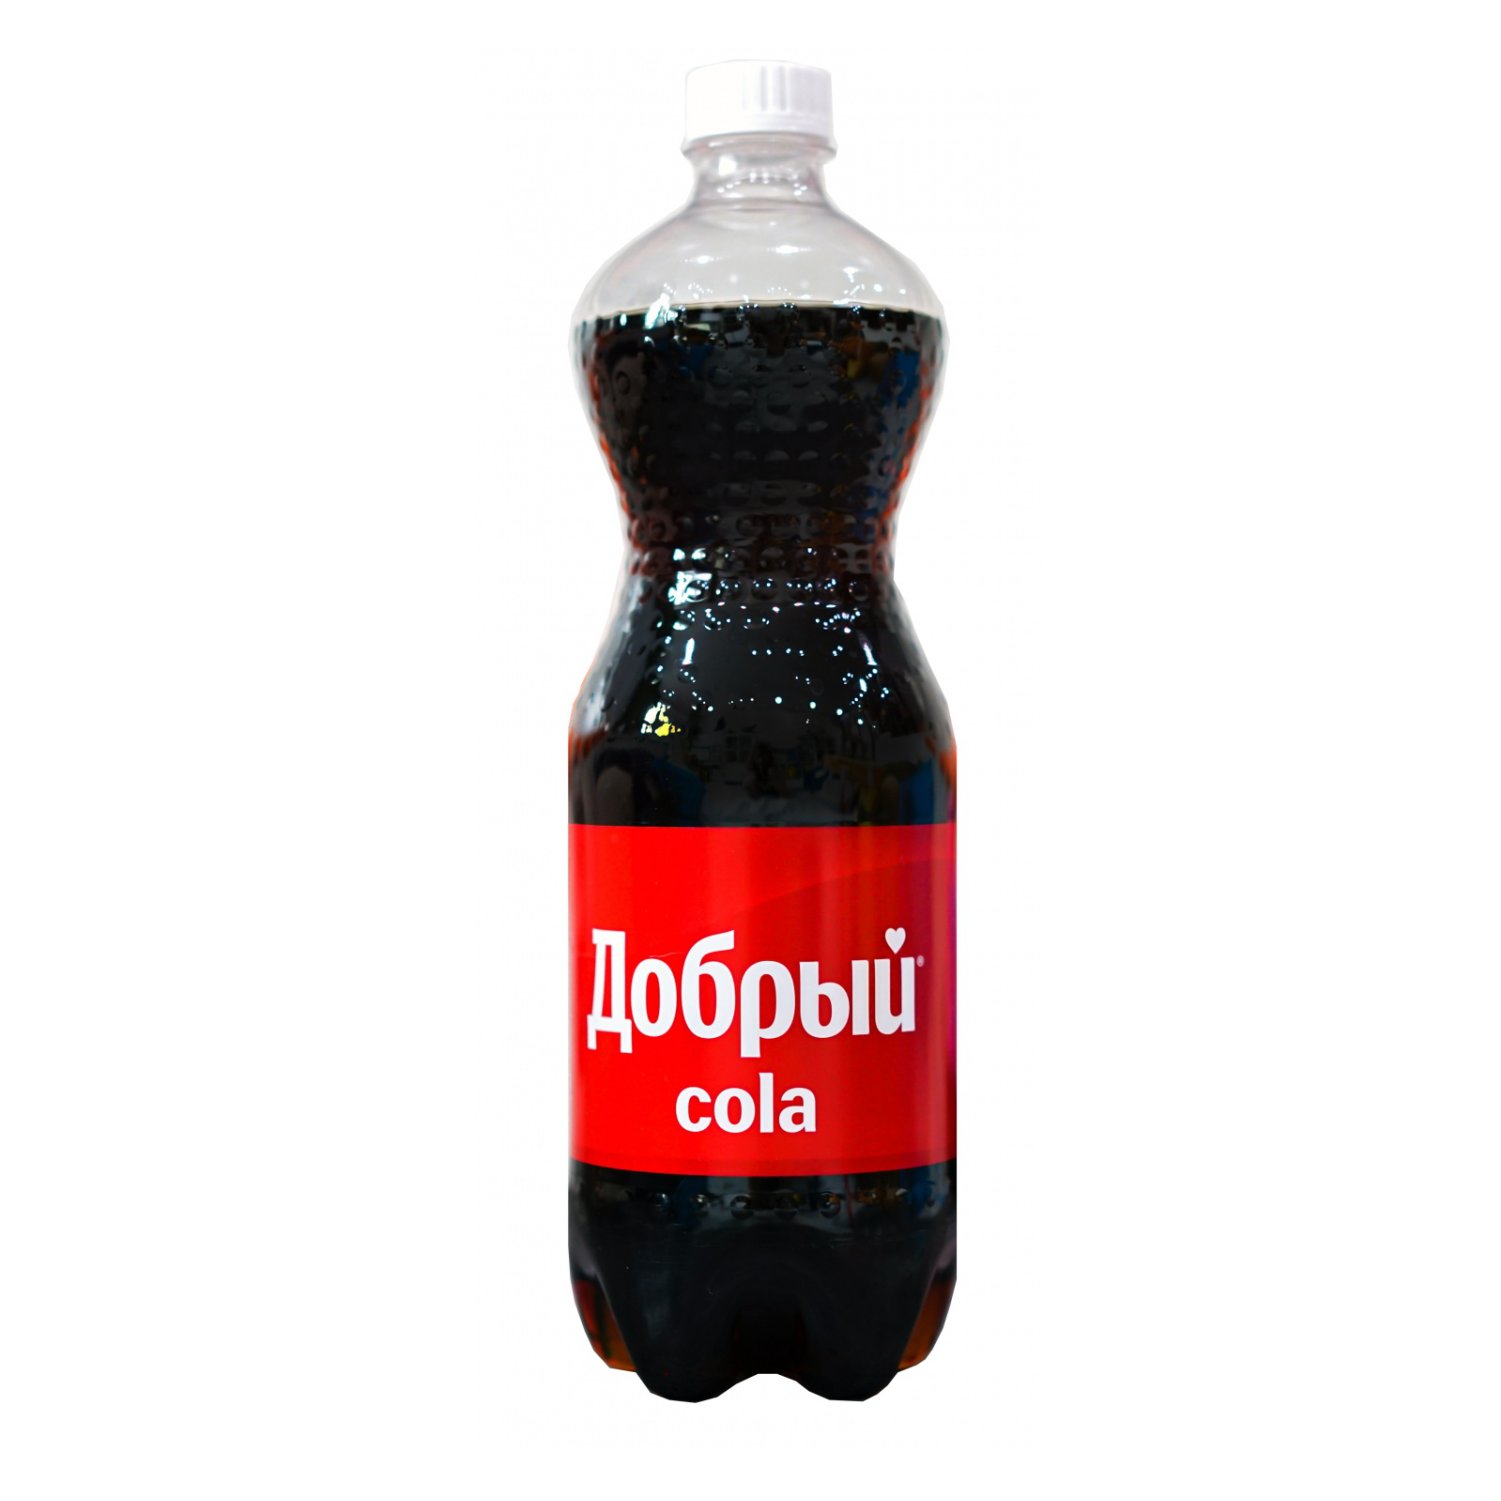 Добрый cola (1 литр)